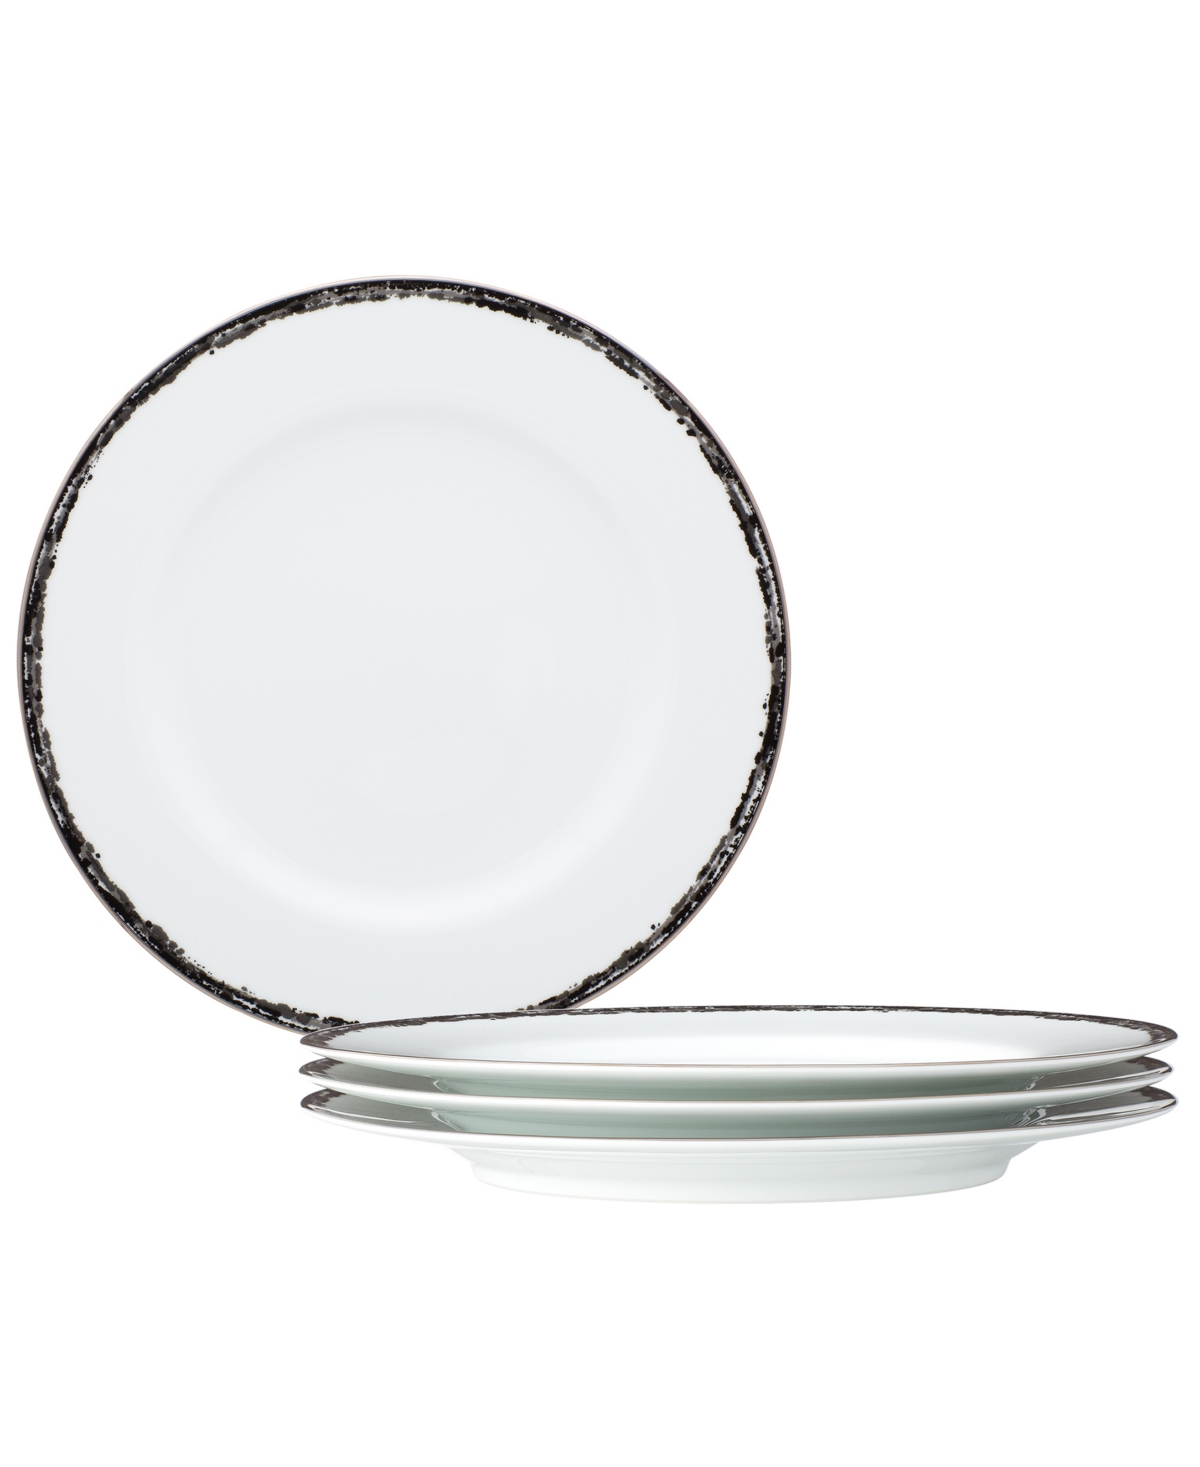 Noritake Rill 4 Piece Dinner Plate Set, Service For 4 In Black